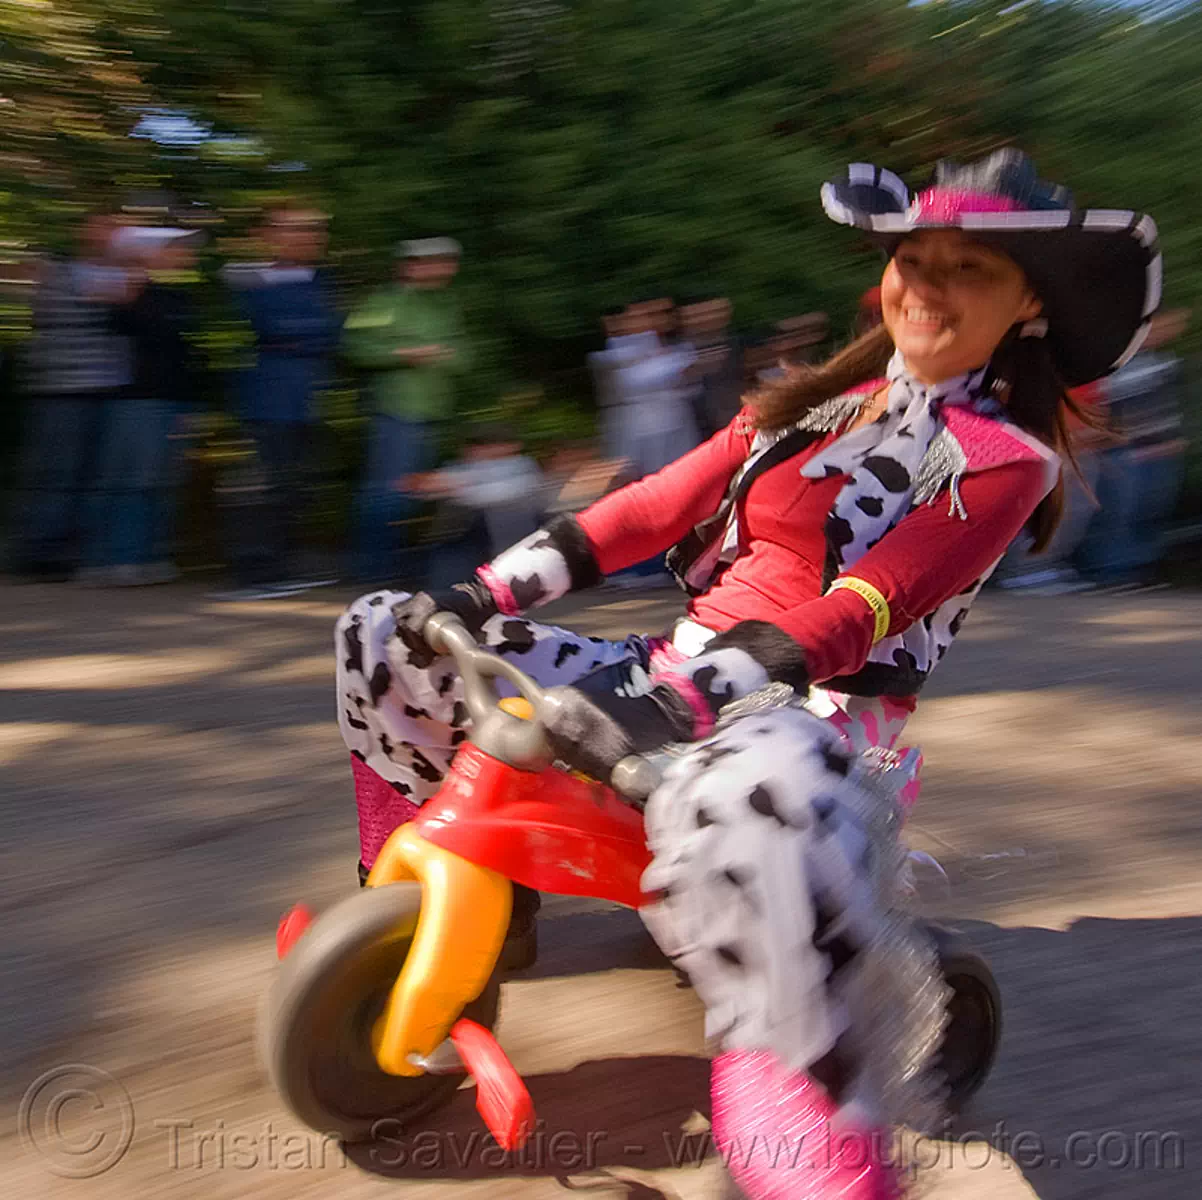 cowgirl - BYOBW - "bring your own big wheel" race - toy tricycles (san francisco), big wheel, byobw 2011, cowgirl costume, drift trikes, moving fast, potrero hill, race, speed, speeding, toy tricycle, toy trike, trike-drifting, woman